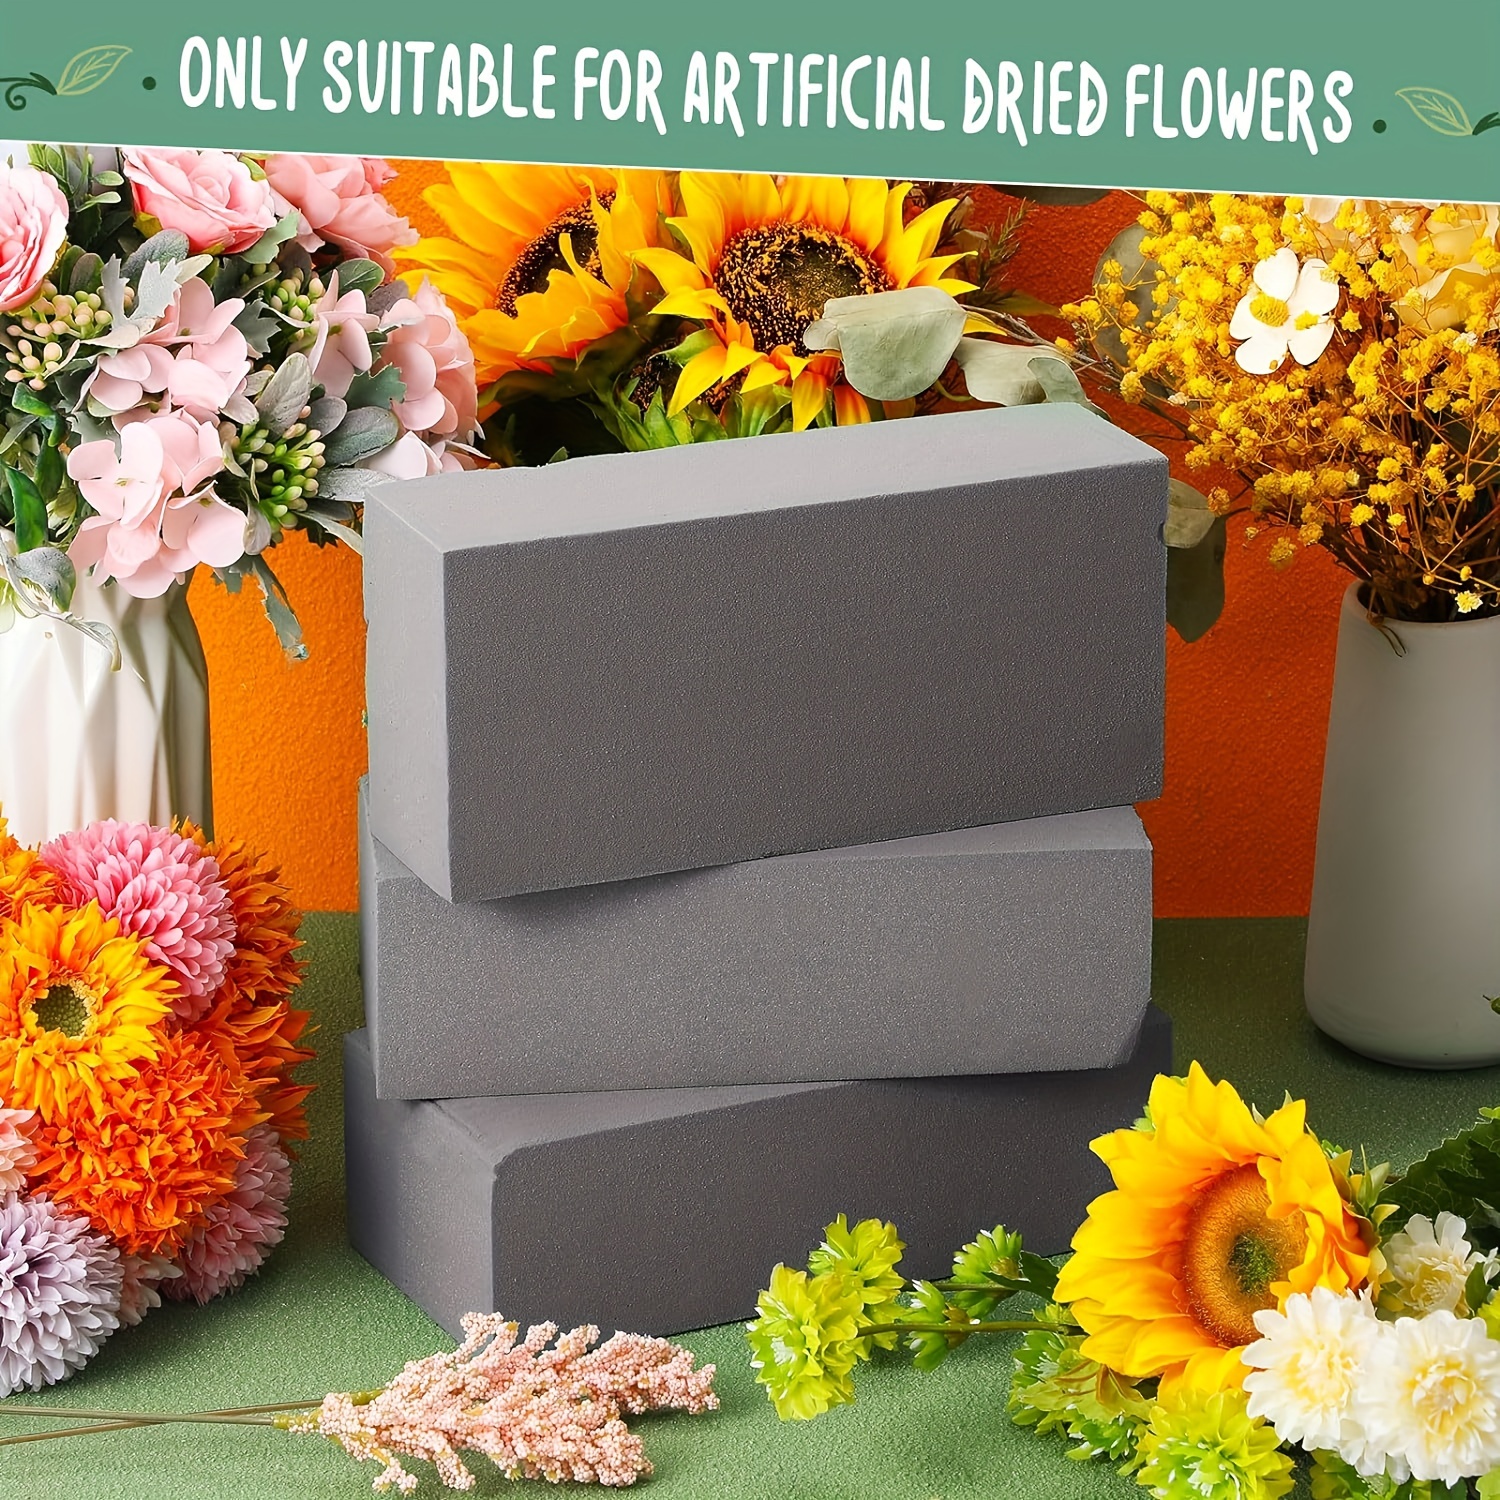 Floral Foam Brick Artificial Flower